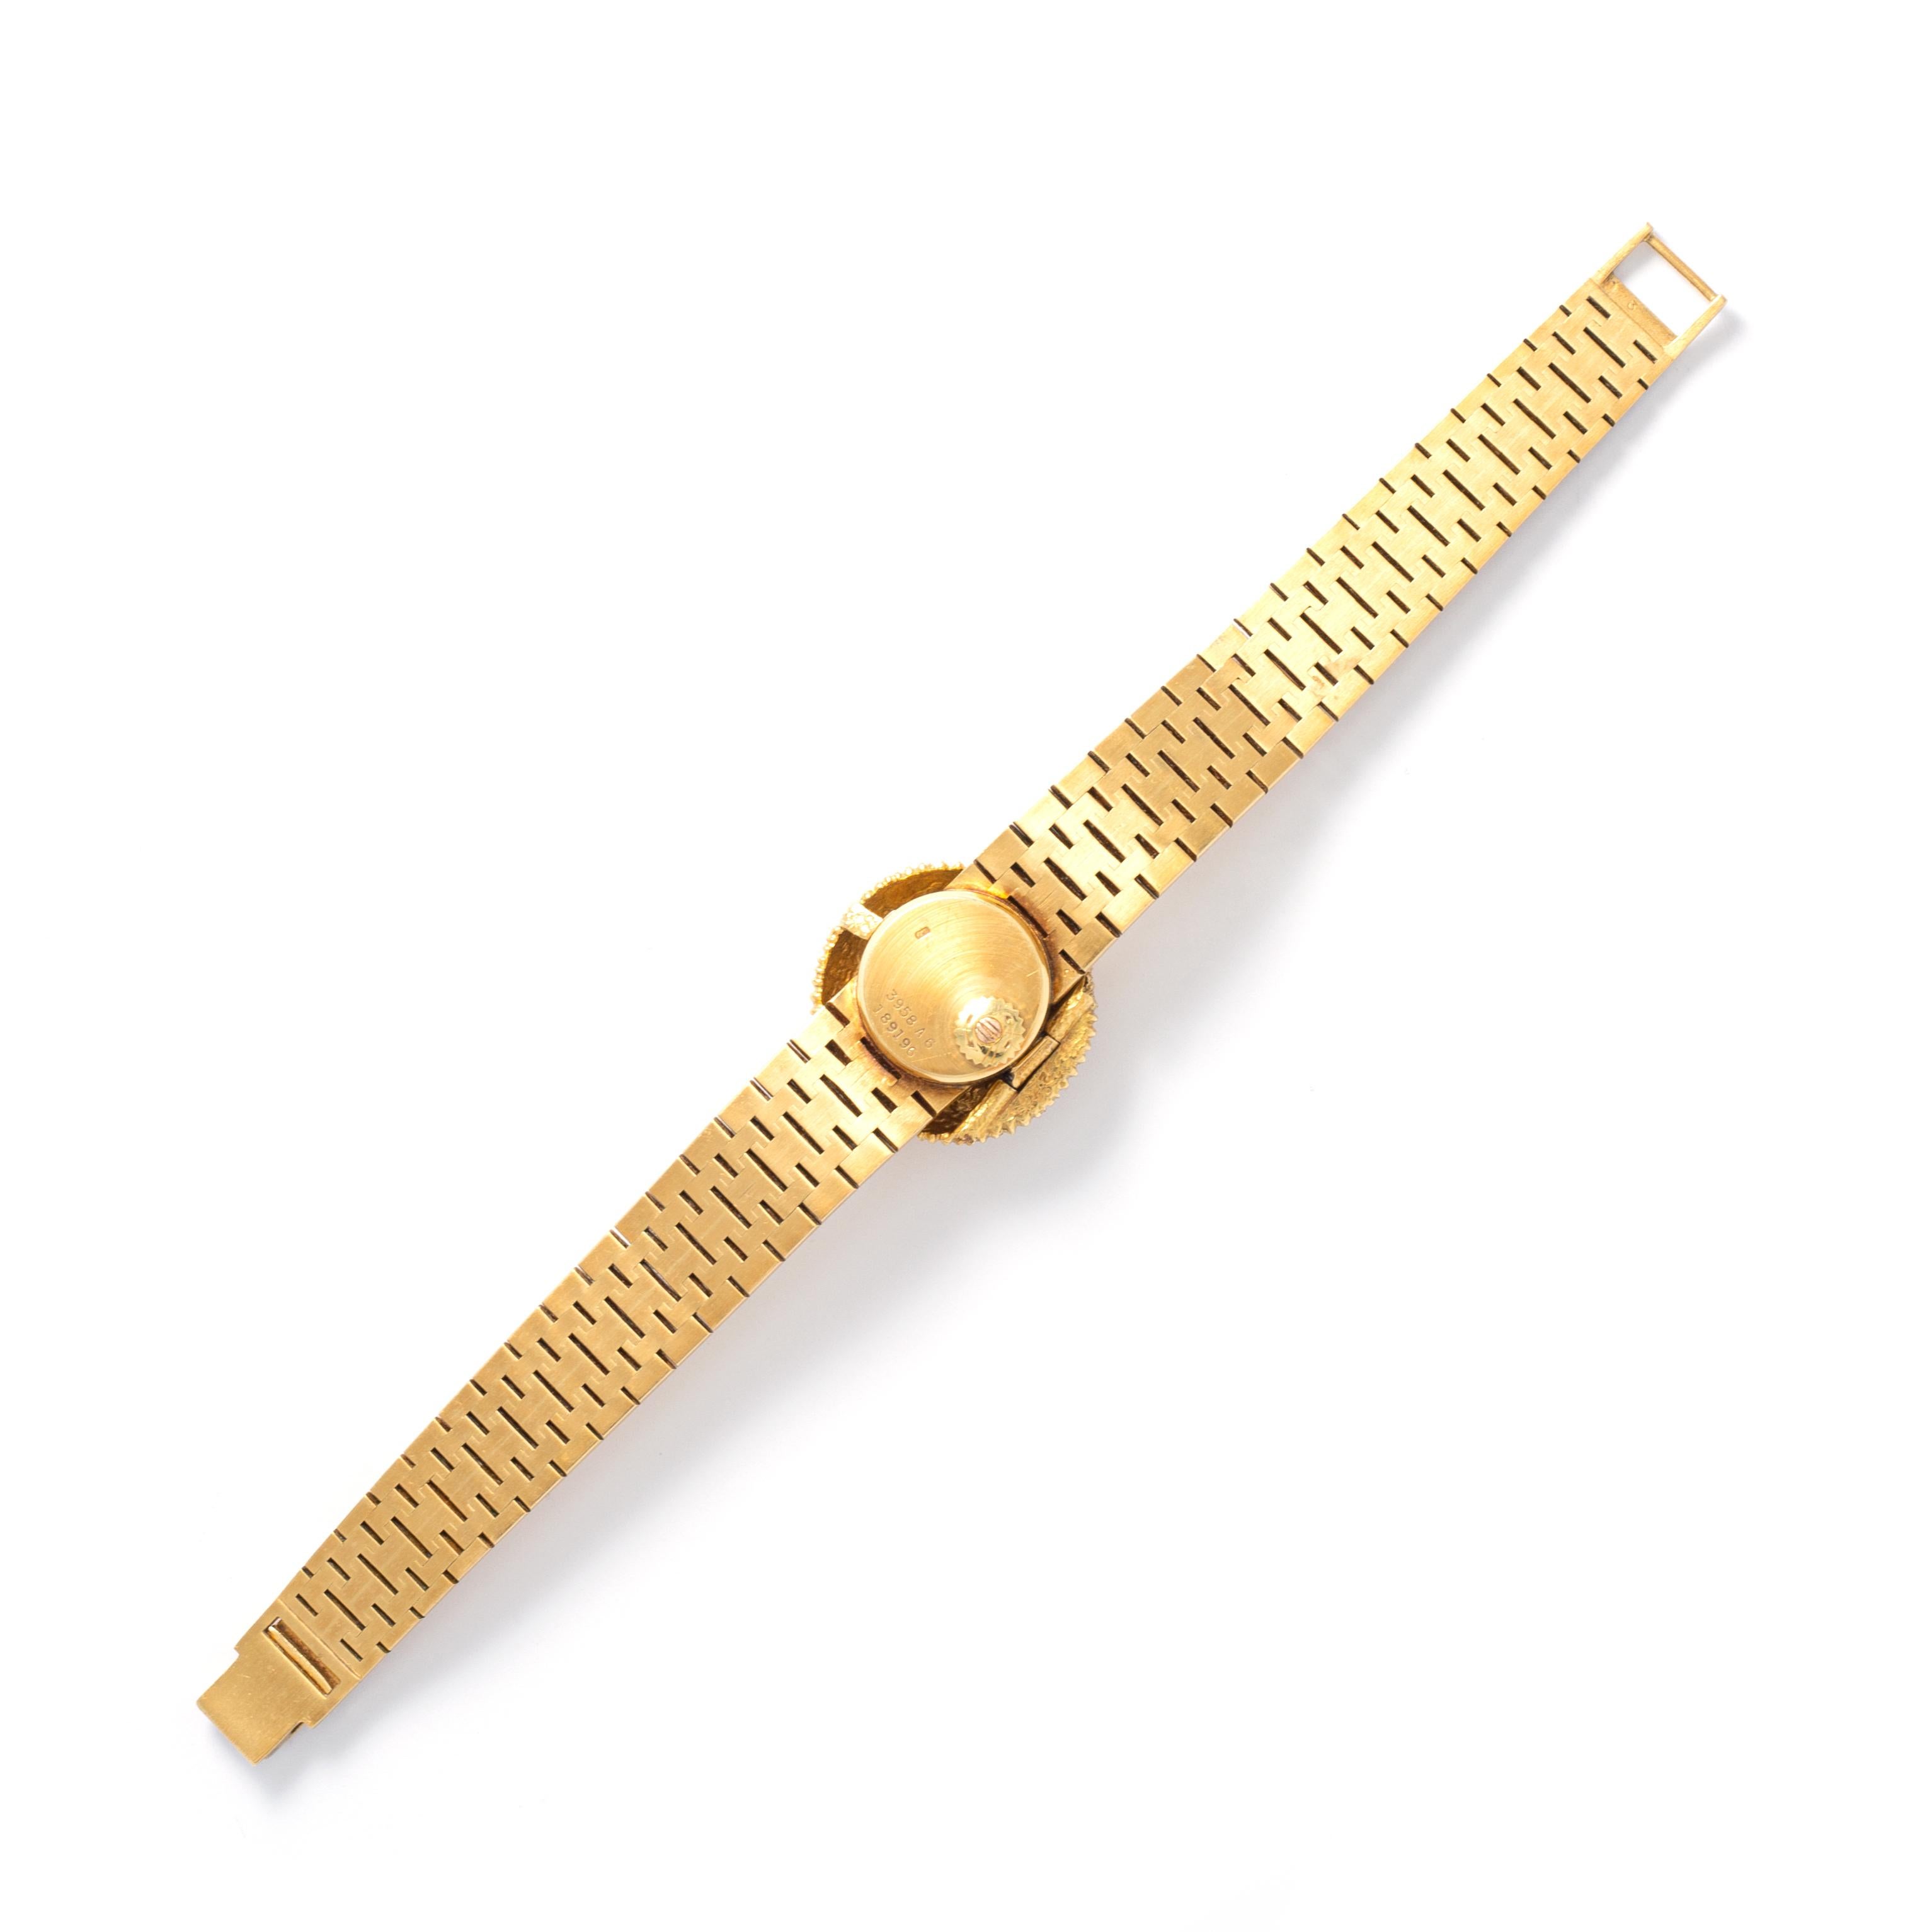 Piaget 18Karat Yellow Gold Wristwatch, circa 1960s For Sale 3